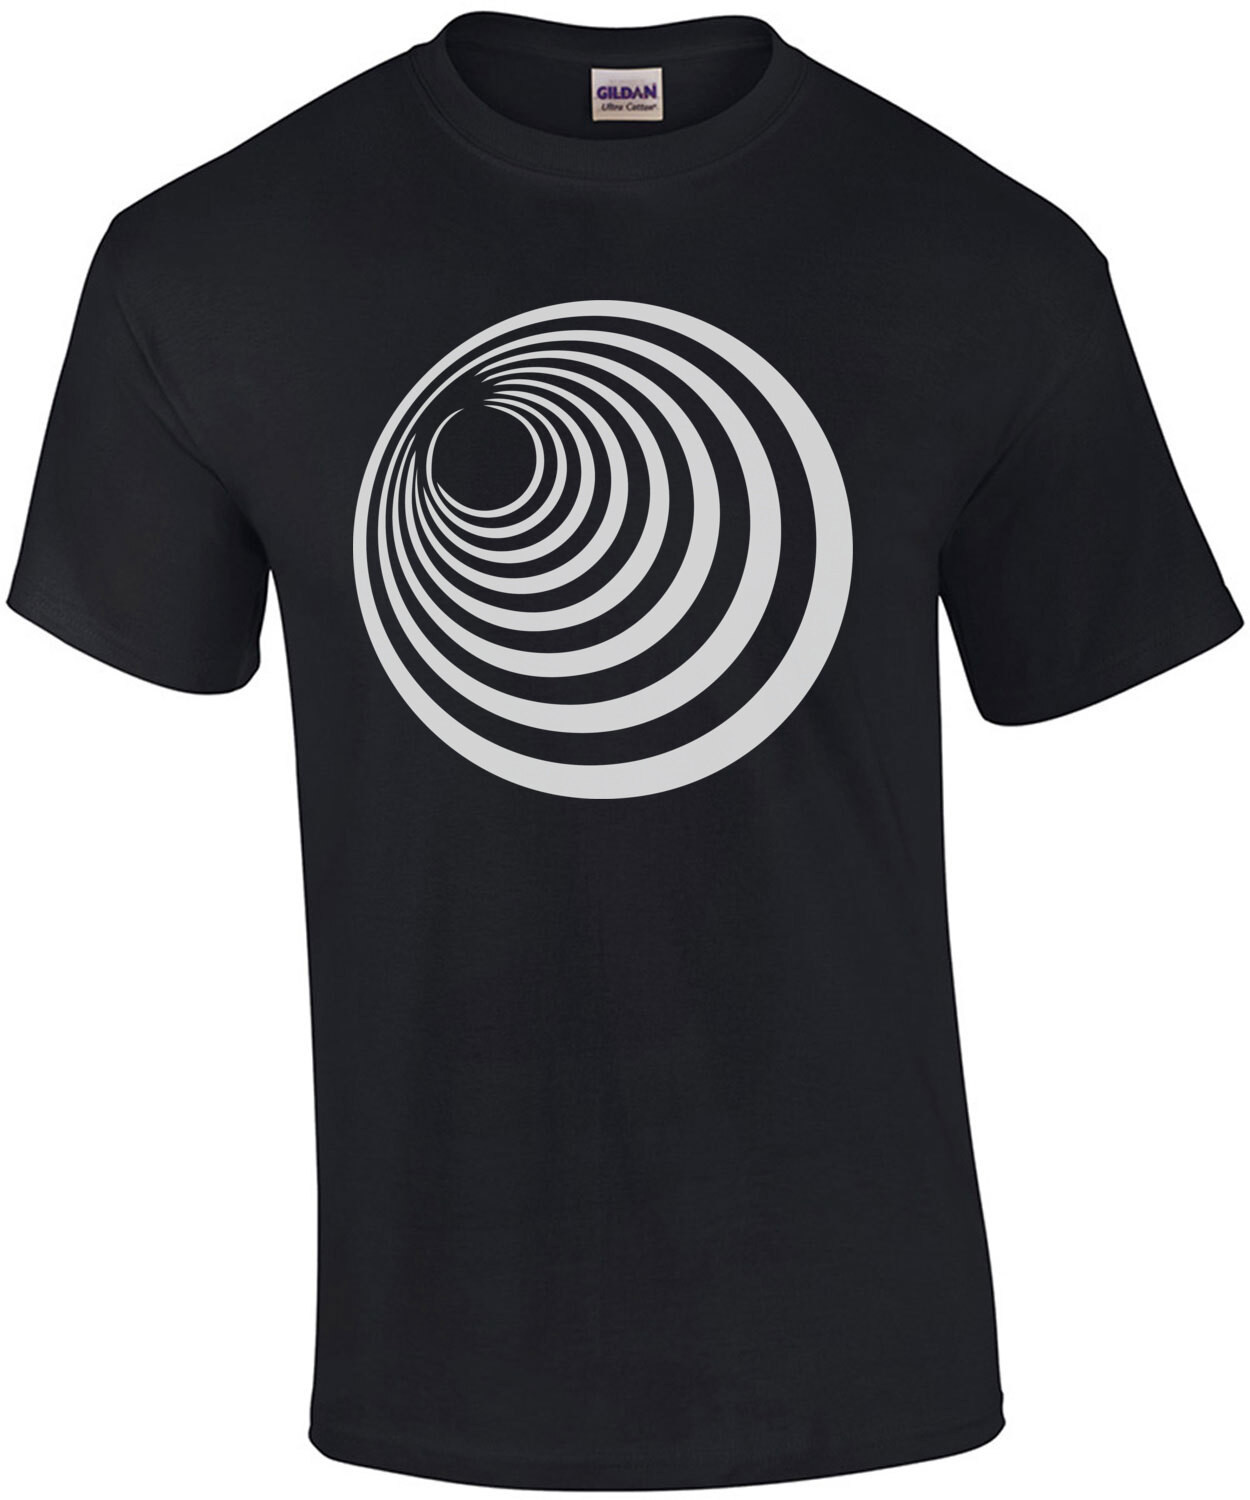 The Twilight Zone T-Shirt